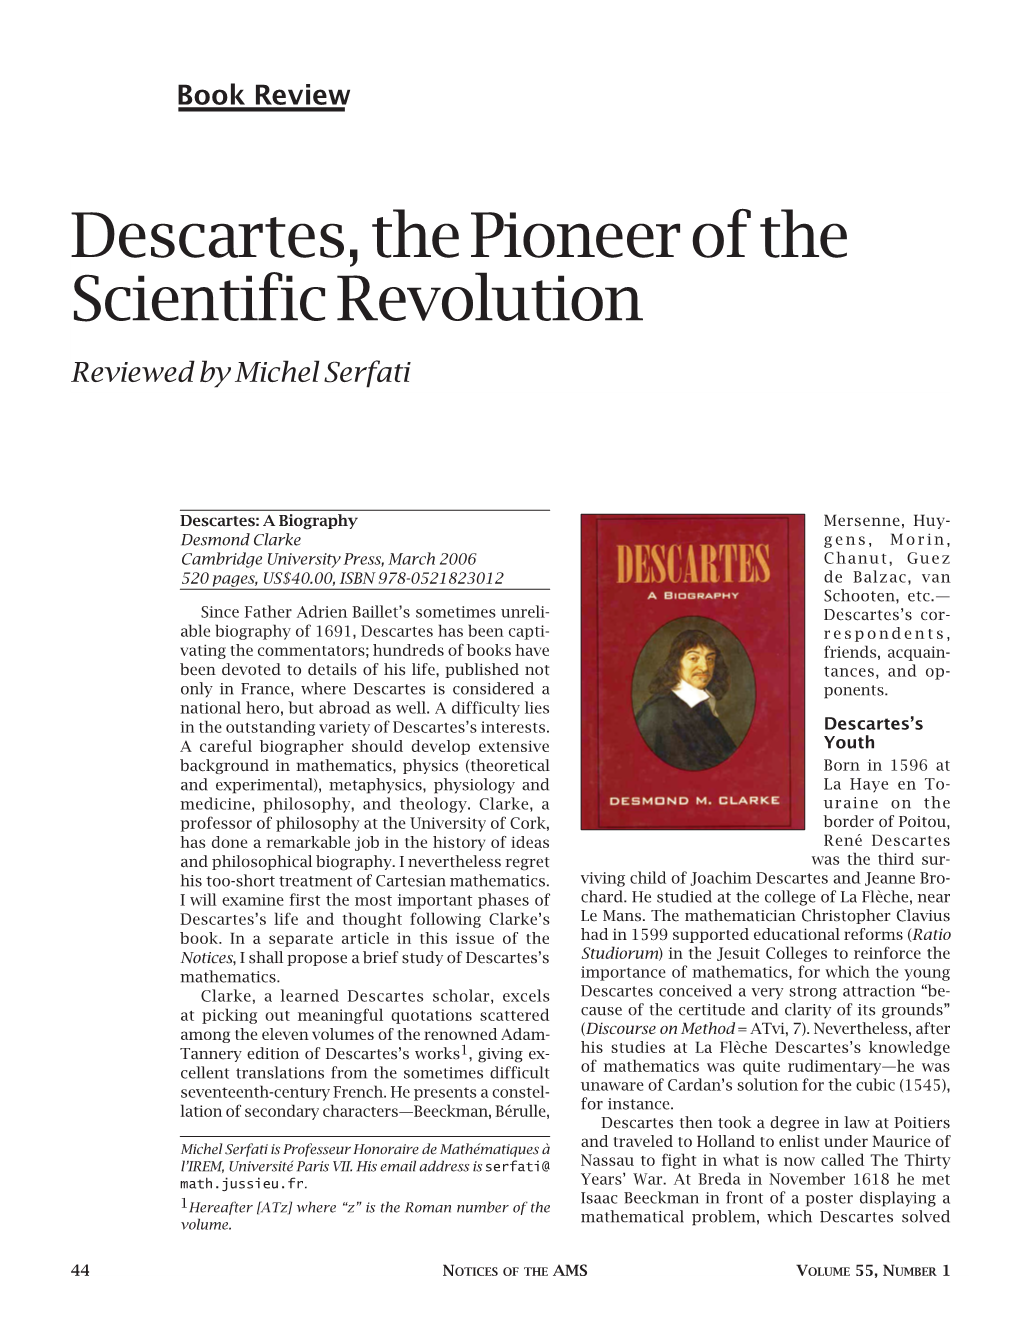 Descartes, the Pioneer of the Scientific Revolution Reviewed by Michel Serfati